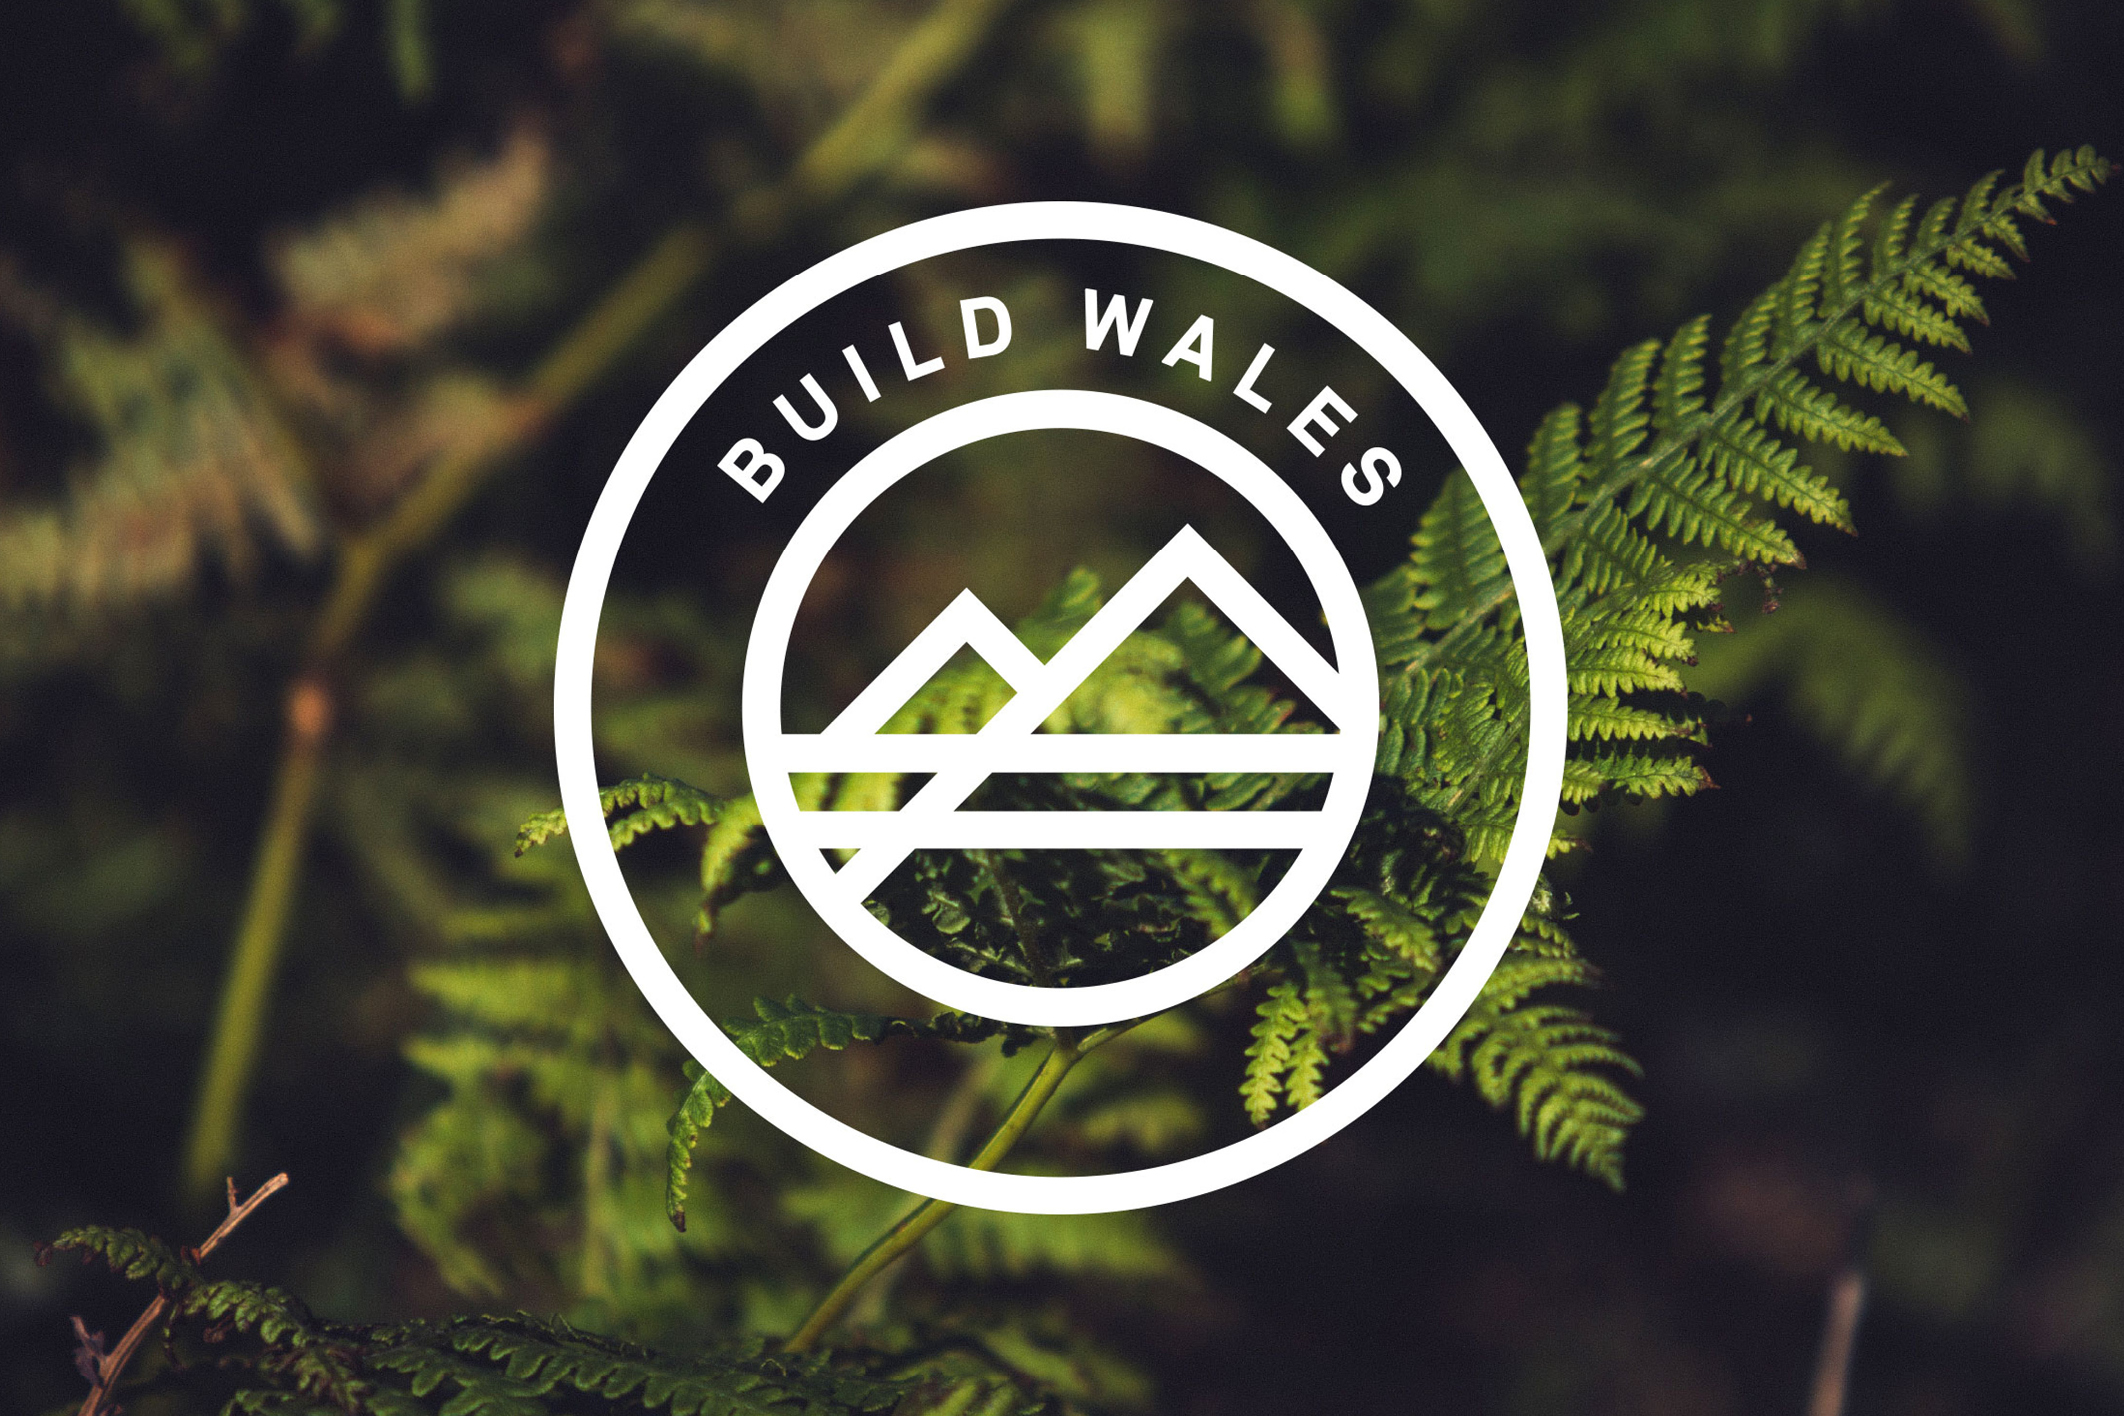 Build Wales